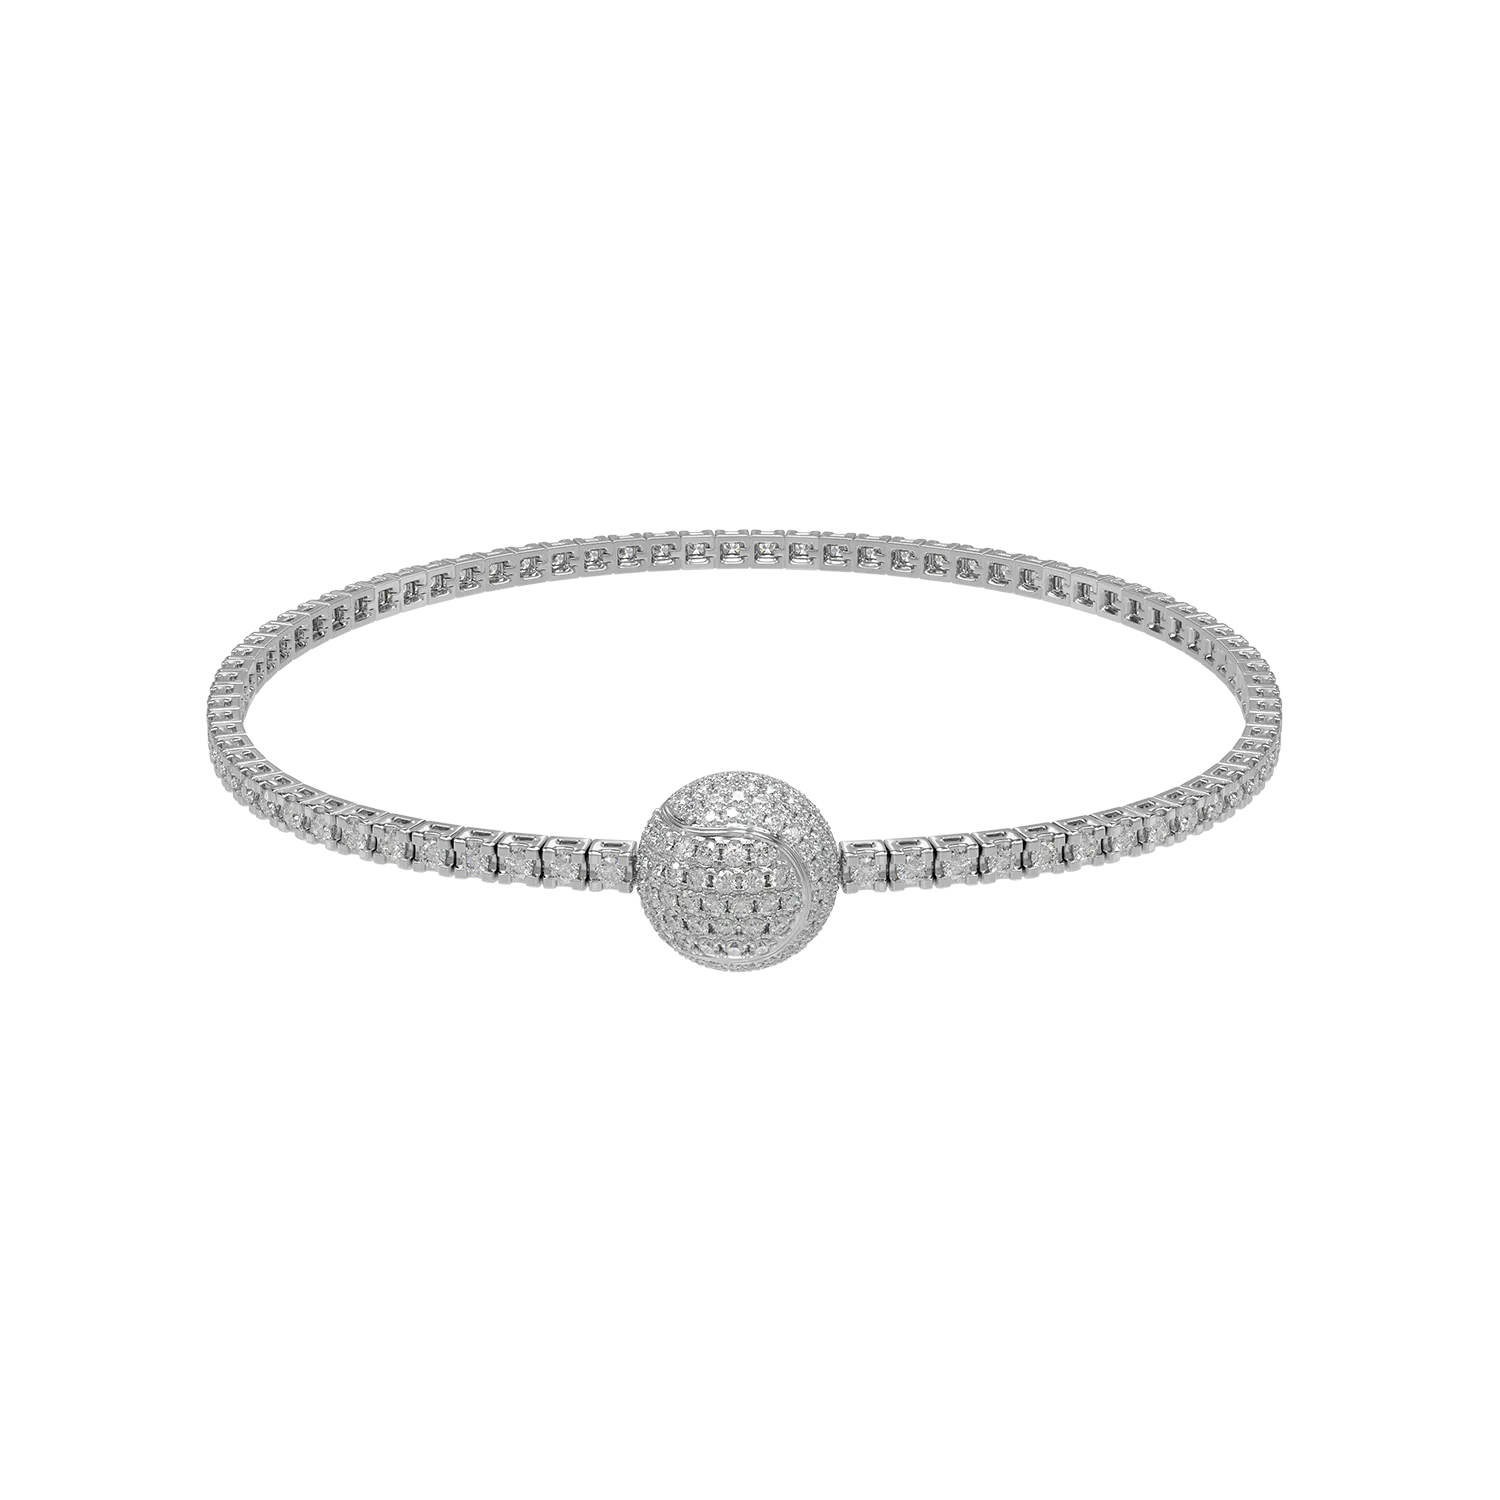 Legacy tennis bracelet with 1.853ct diamonds